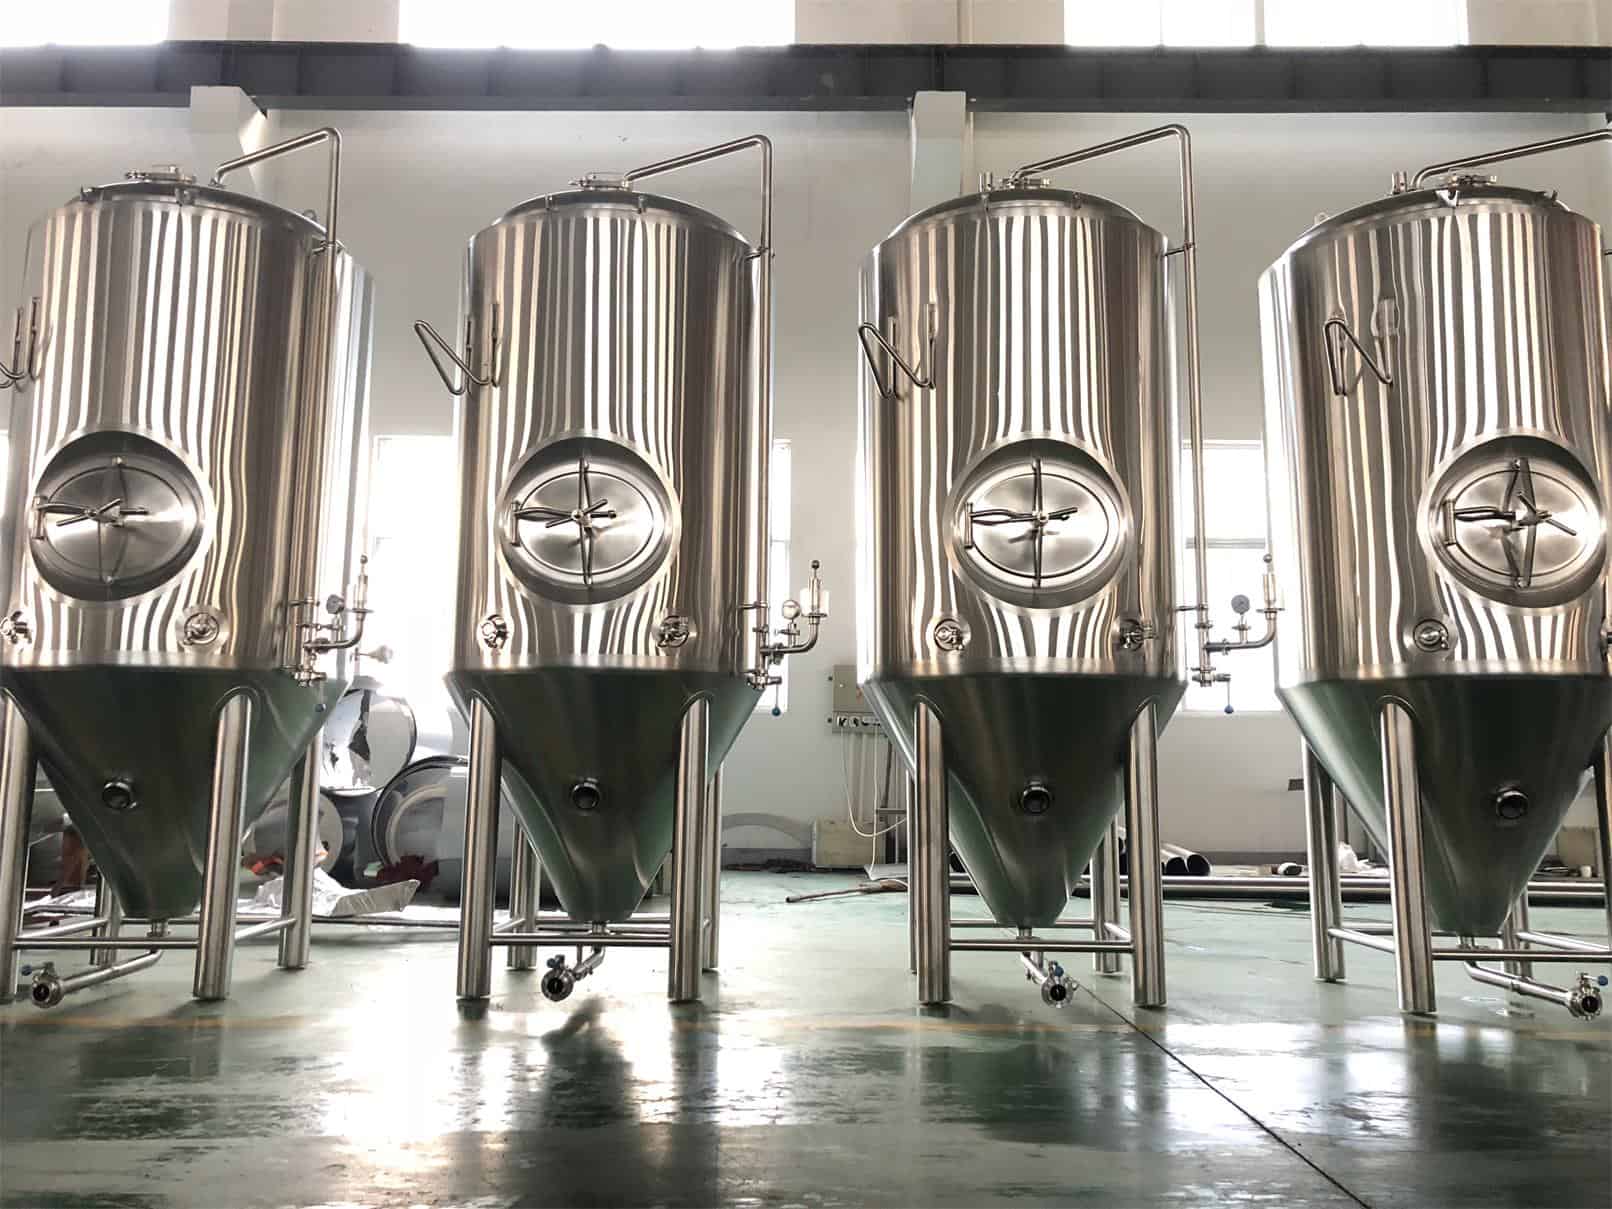 brewery tanks